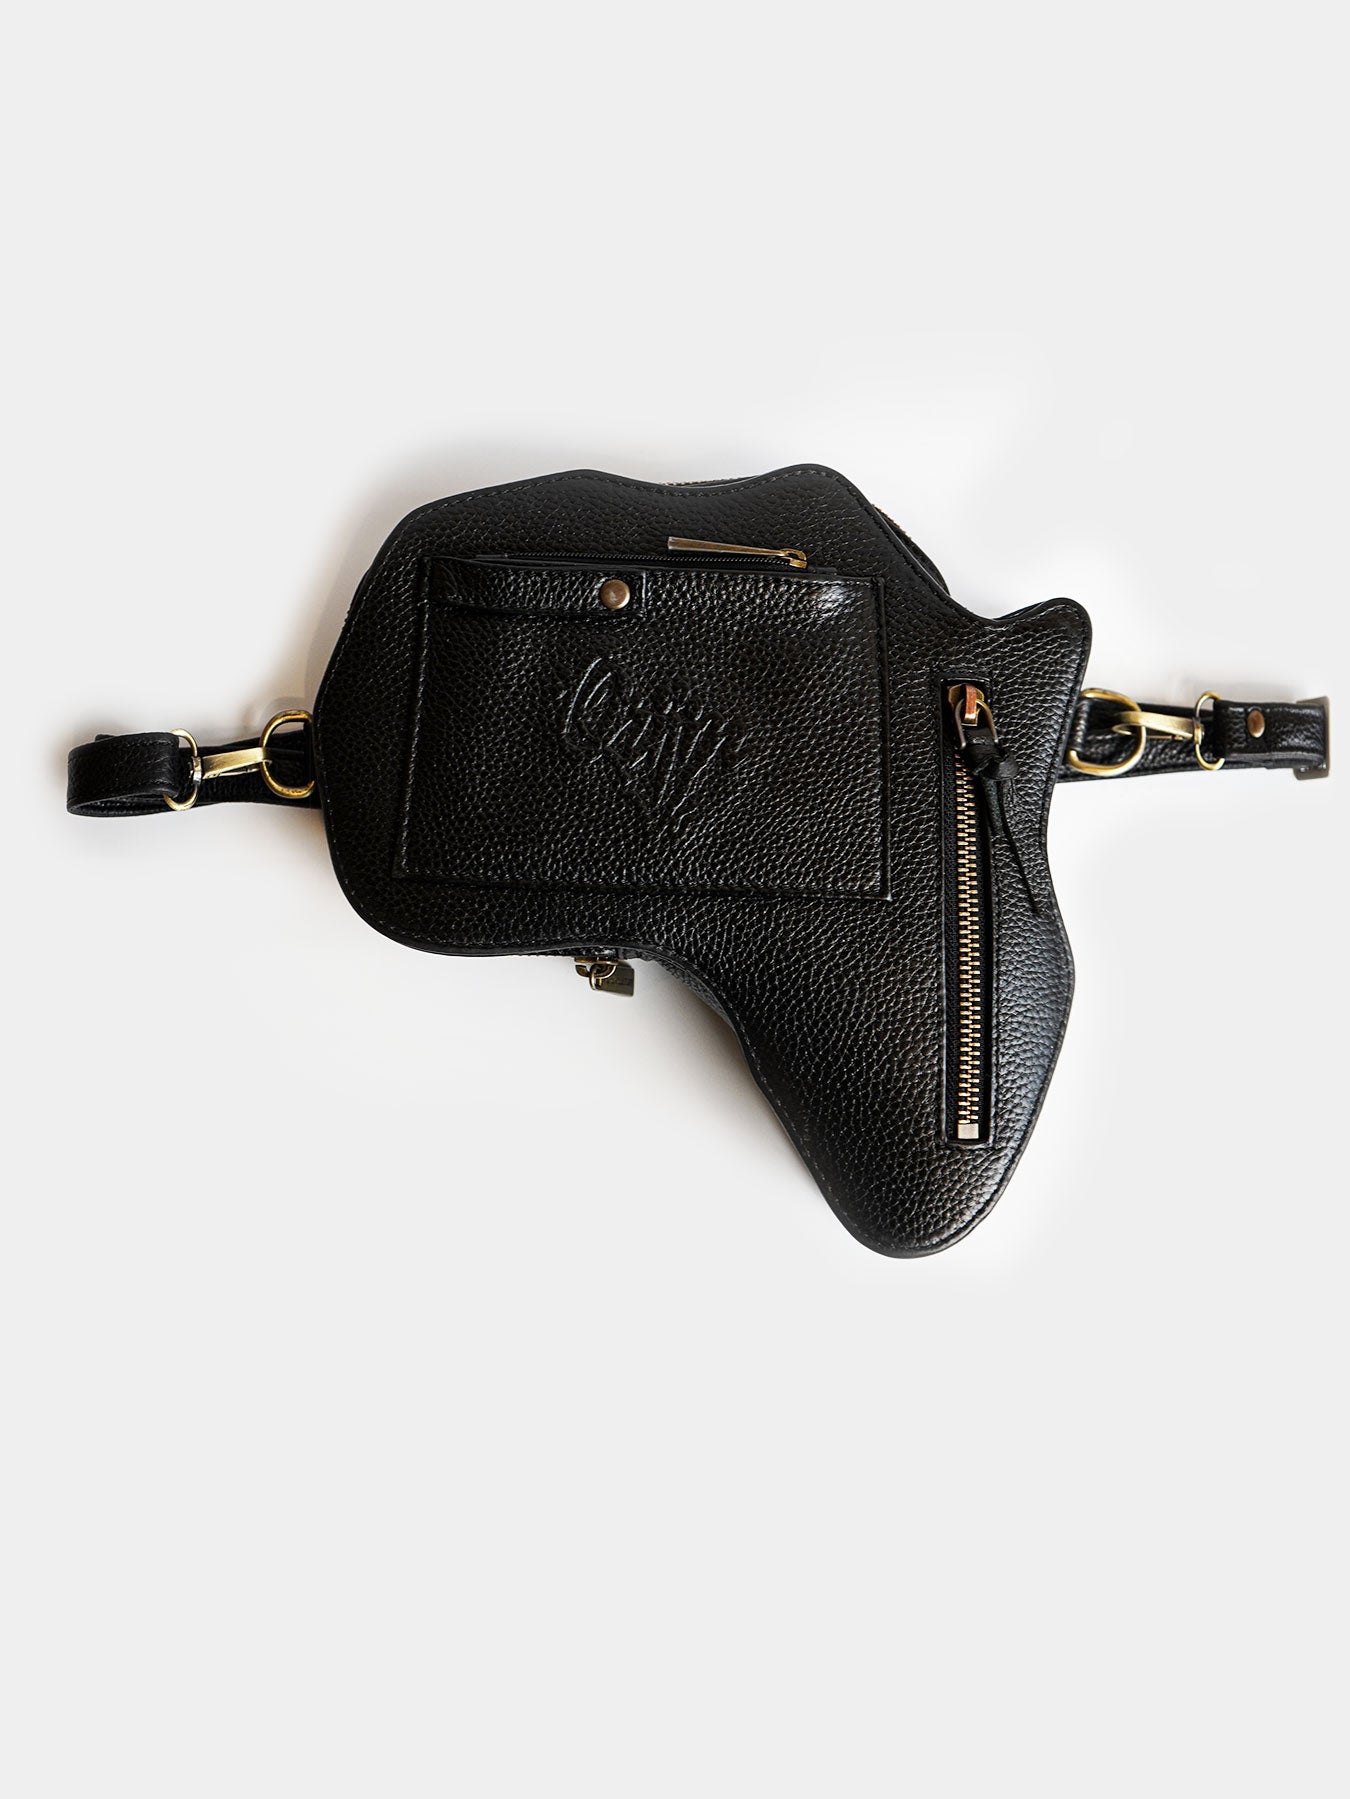 Africa Fanny Pack/ CrossBody Bag - Black Leather - SHOP | Orijin Culture 